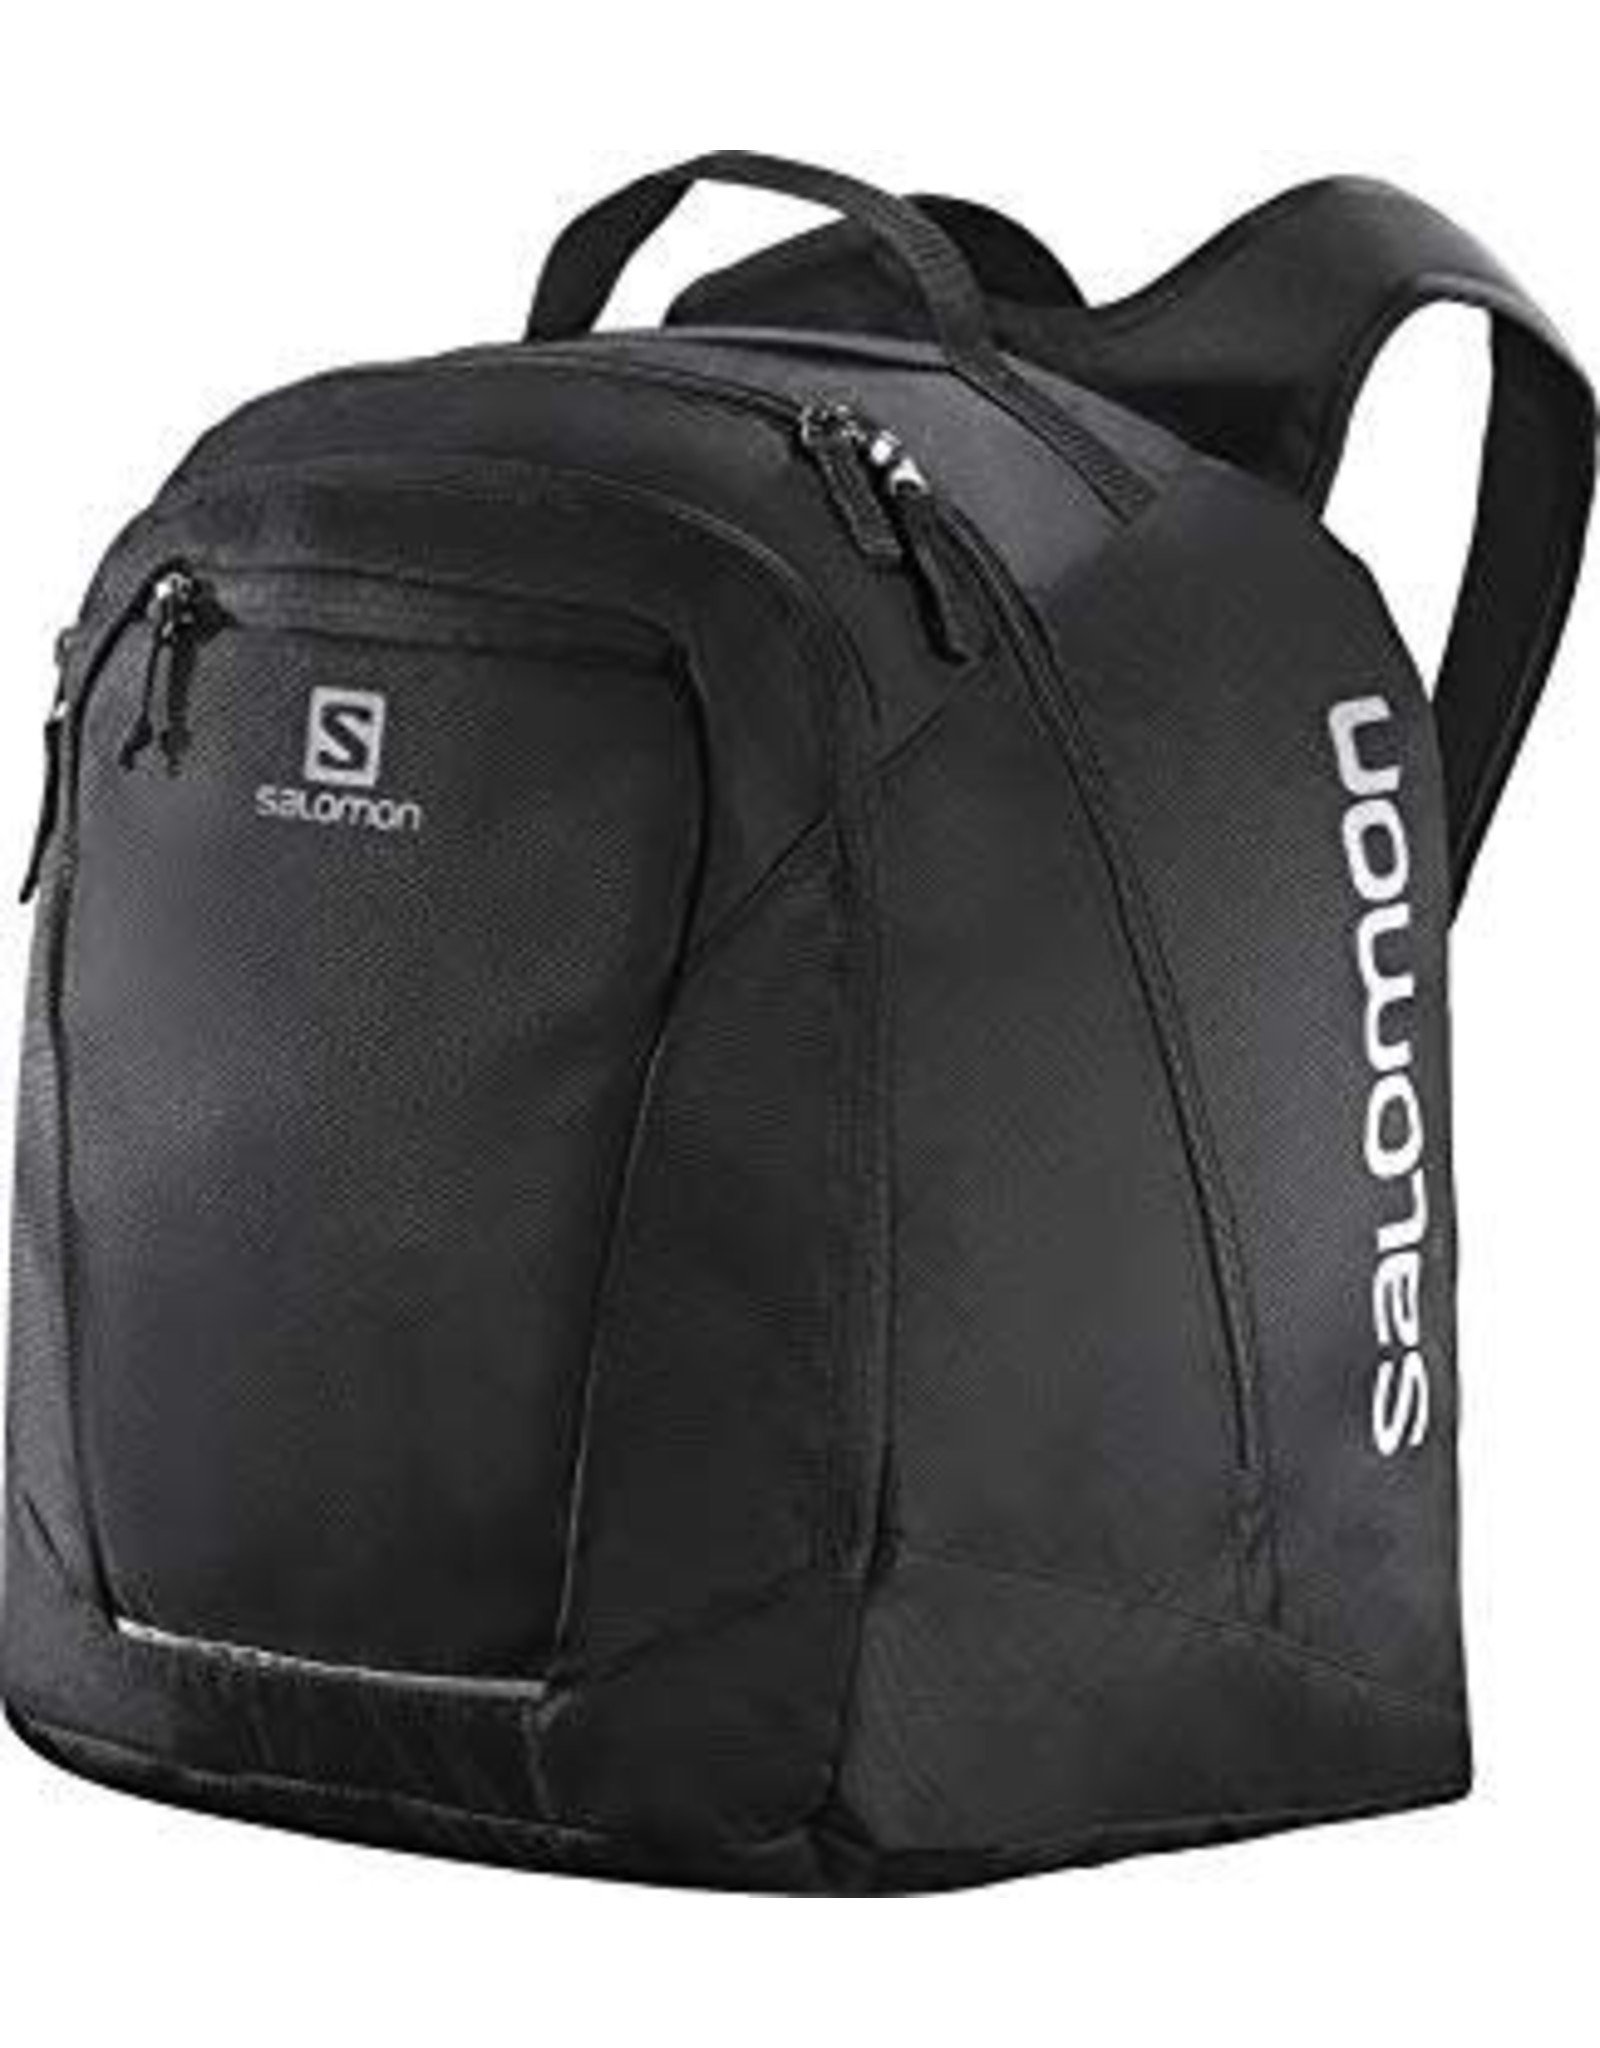 Salomon Original Gear Backpack F17 - Outdoor Elements